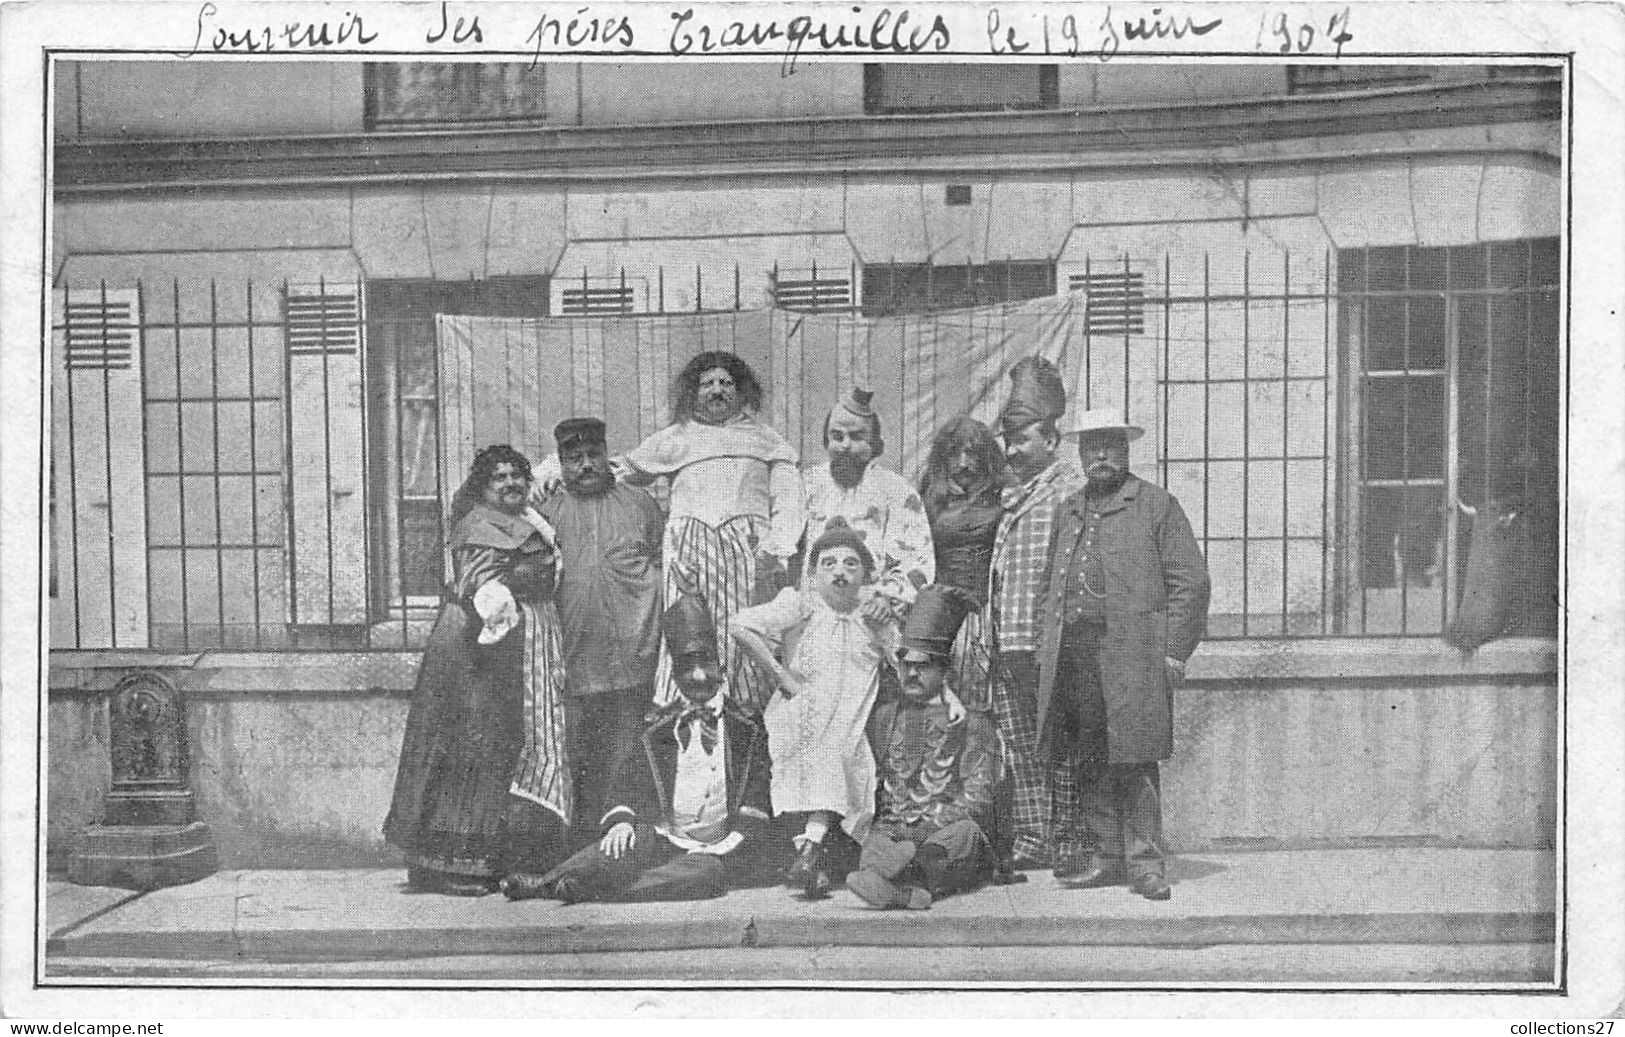 SOUVENIR DES PERES TRANQUILLES LE 19 JUIN 1907 - Circo